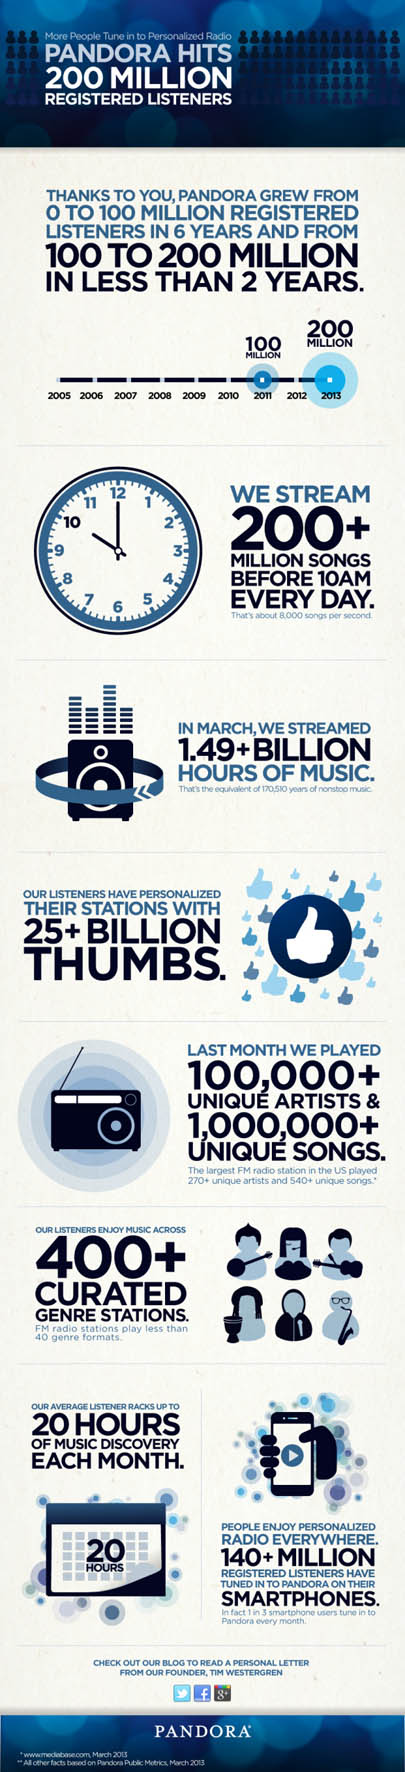 Infographic from Pandora